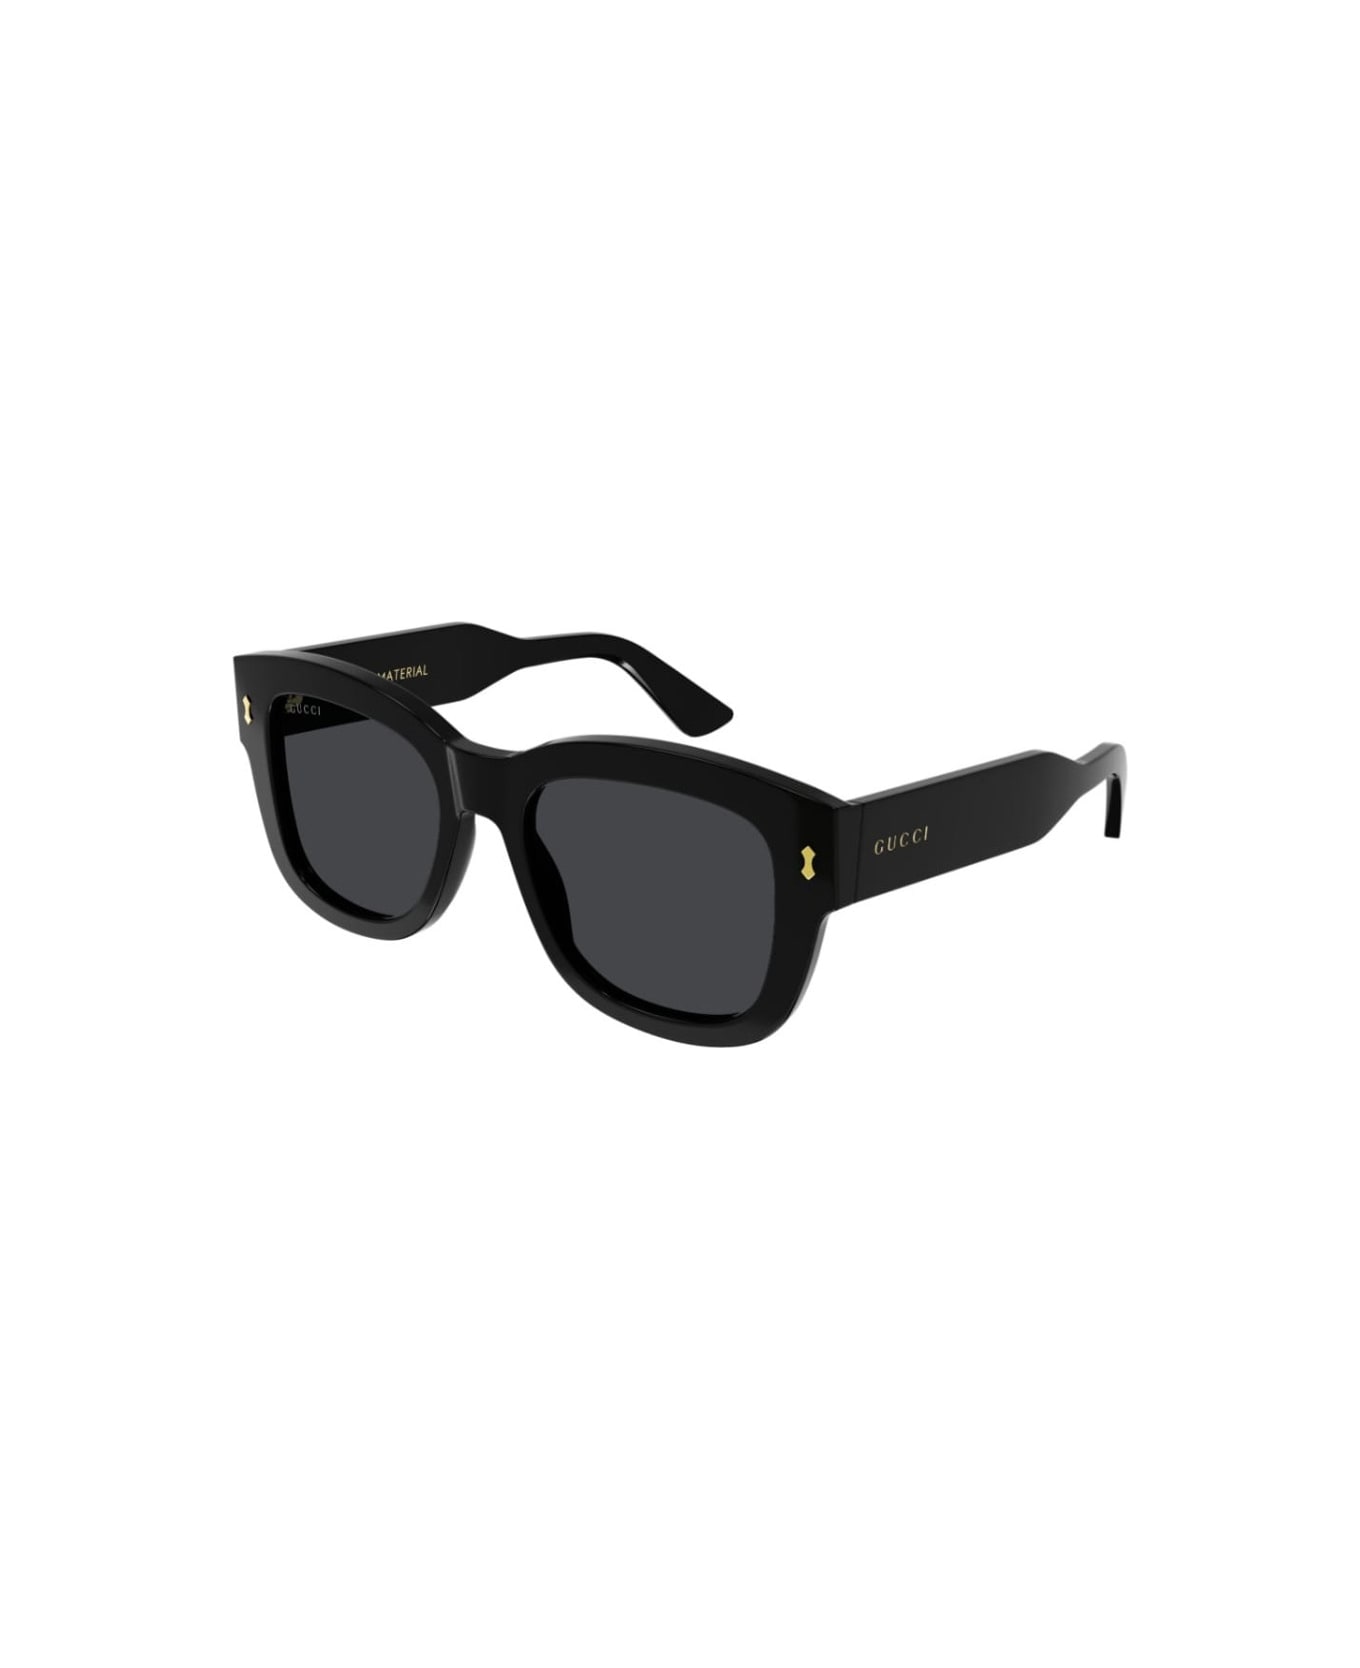 Gucci Eyewear GG1110S001 Sunglasses